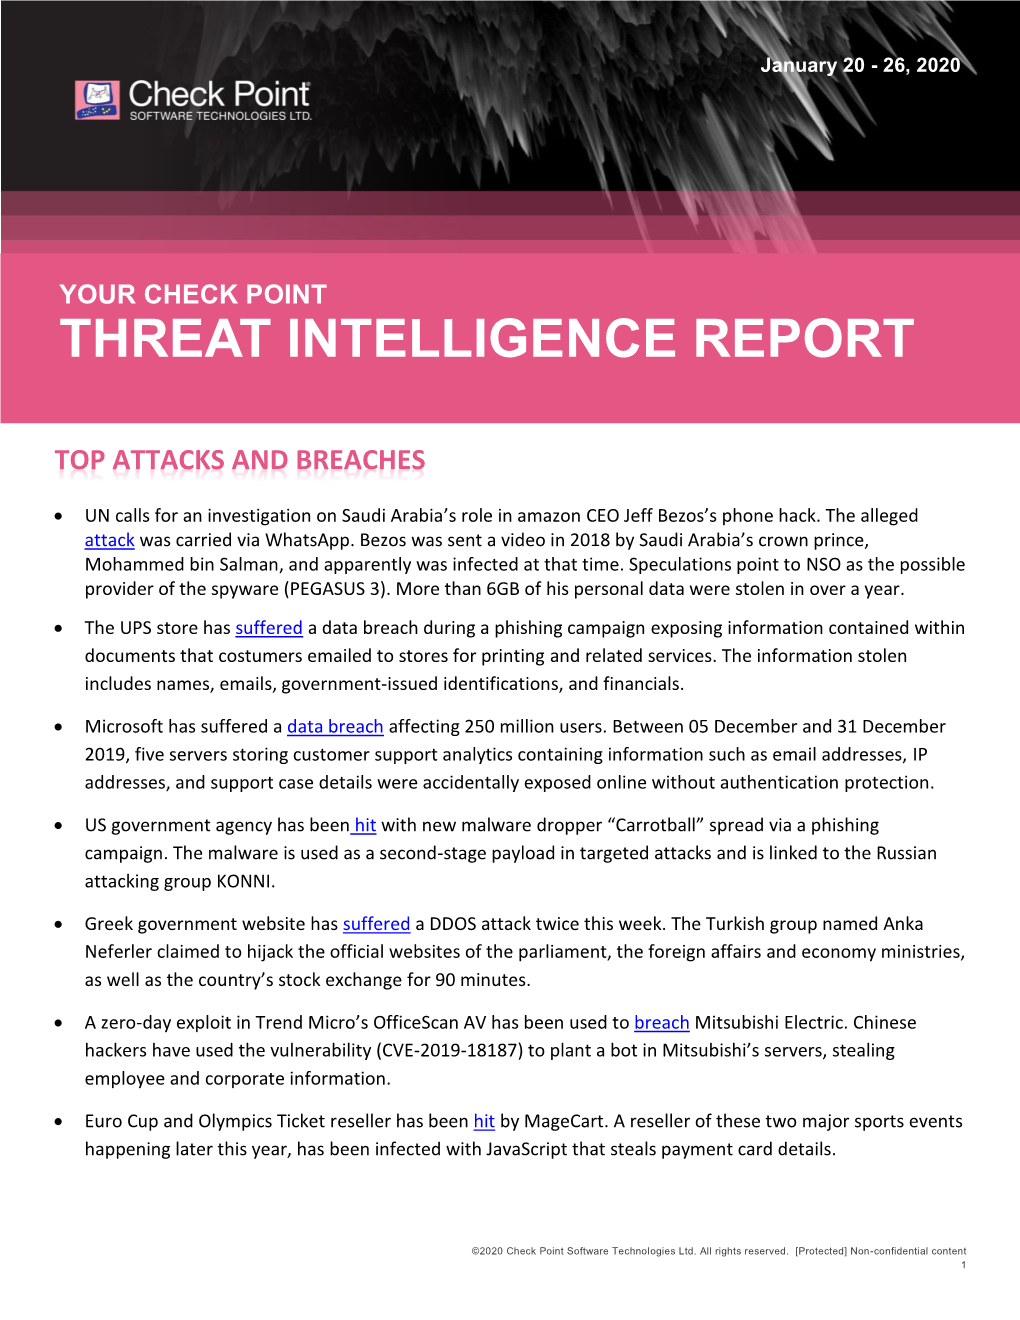 Threat Intelligence Bulletin